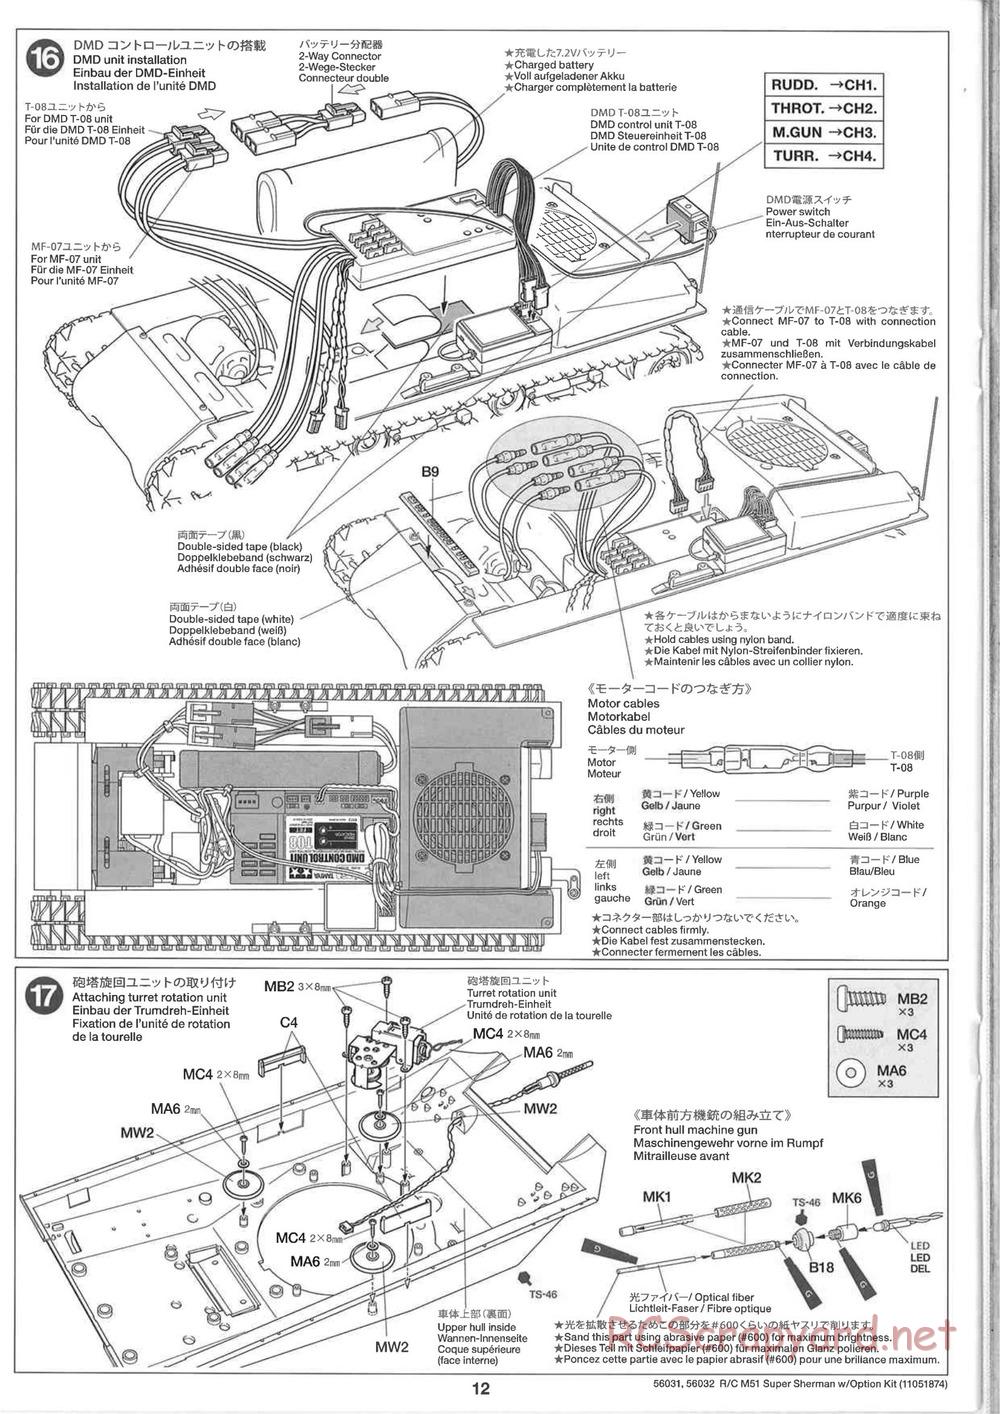 Tamiya - Super Sherman M-51 - 1/16 Scale Chassis - Manual - Page 12